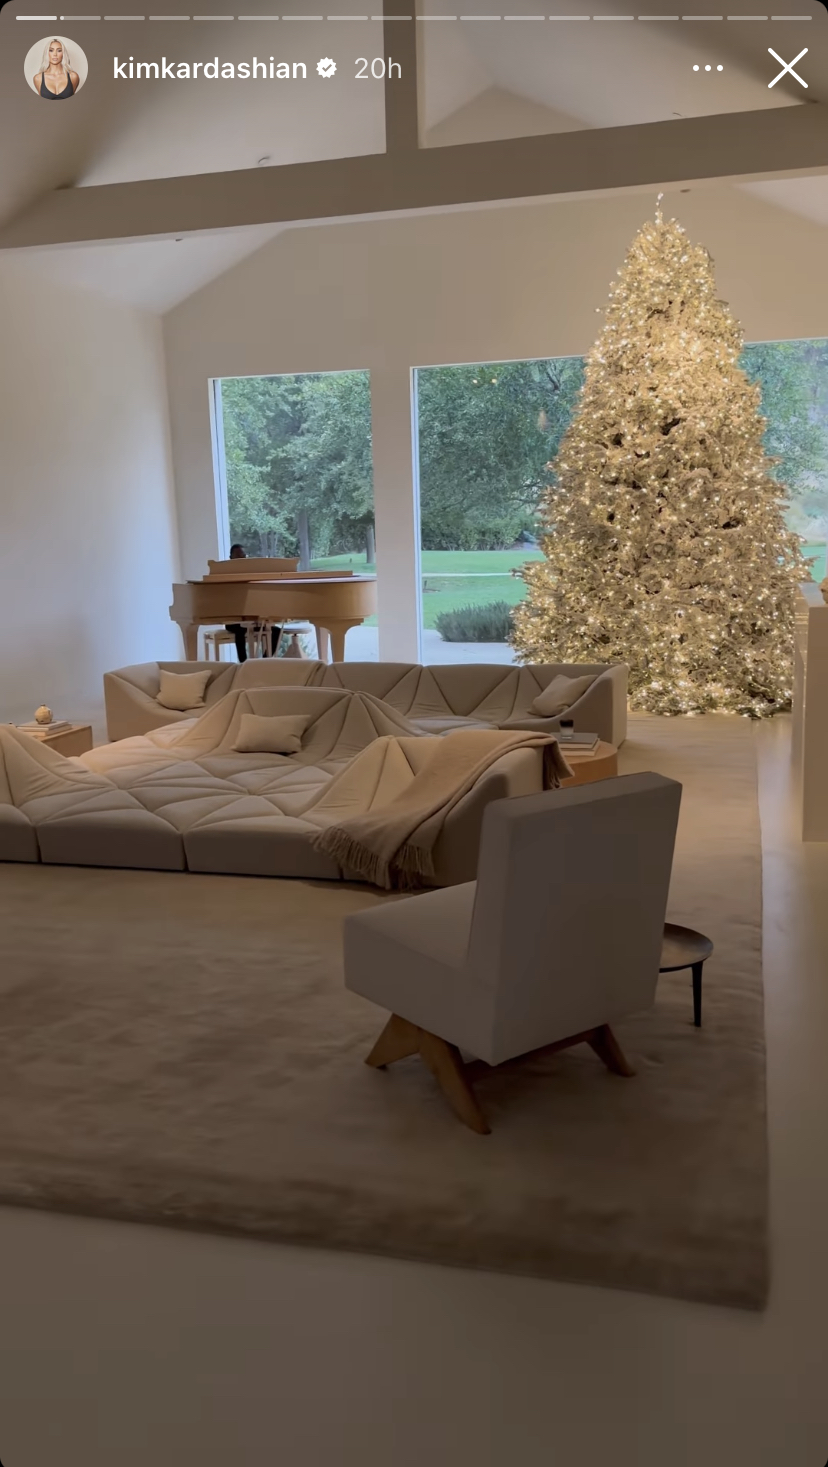 Kim Kardashian's minimalist bathroom, surrounded by Christmas trees ...